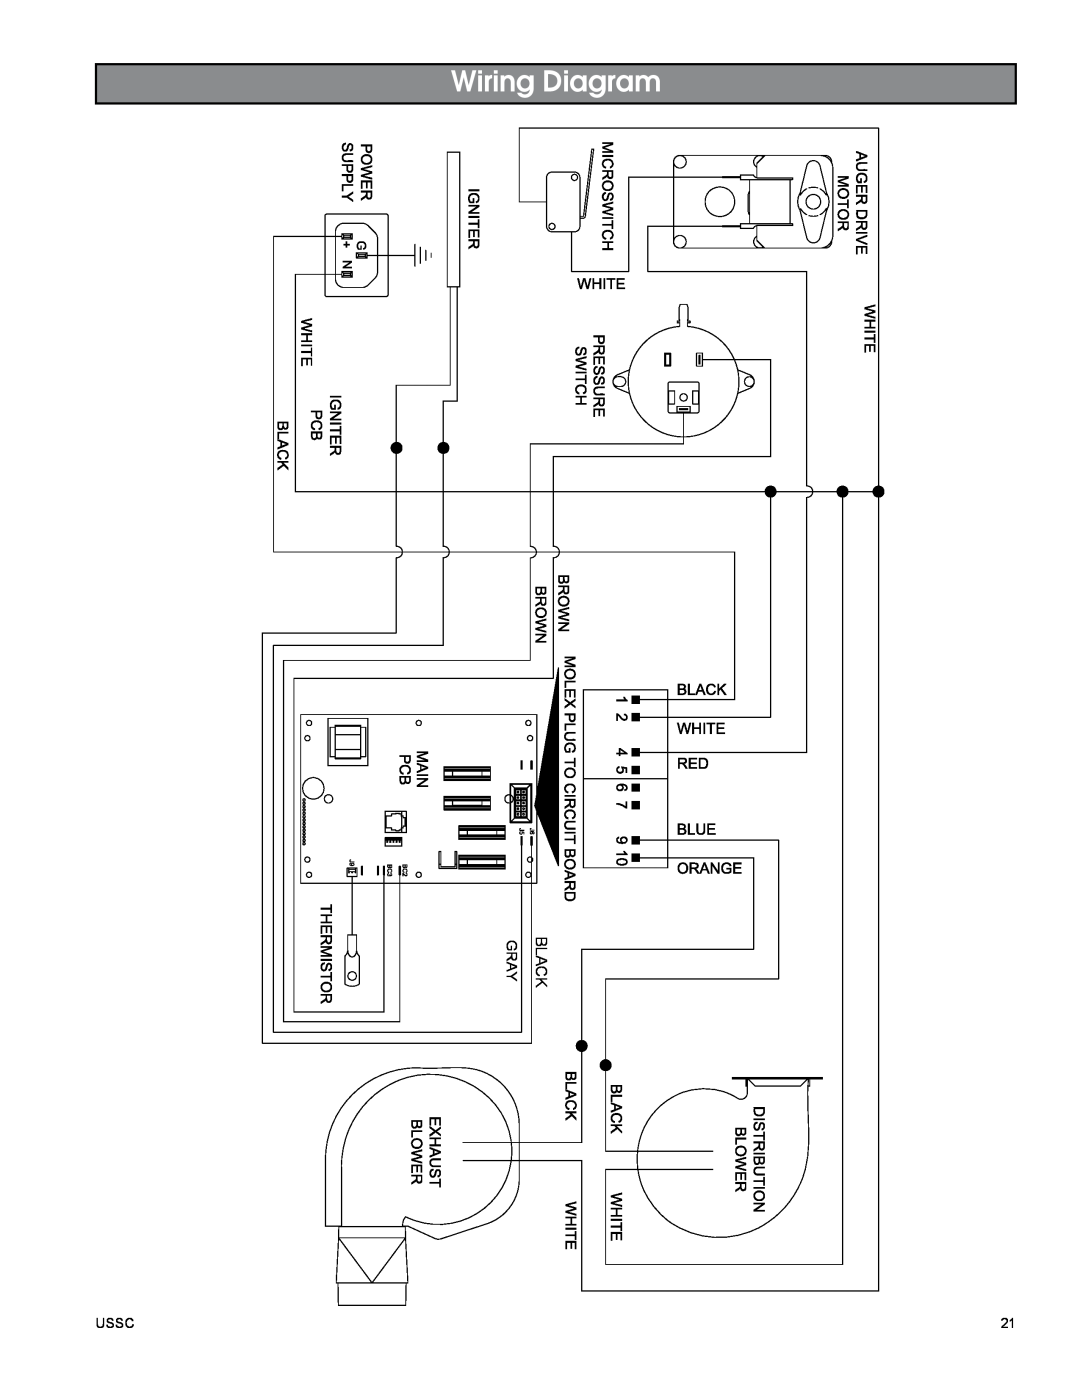 United States Stove 5510 owner manual Wiring Diagram, Black 